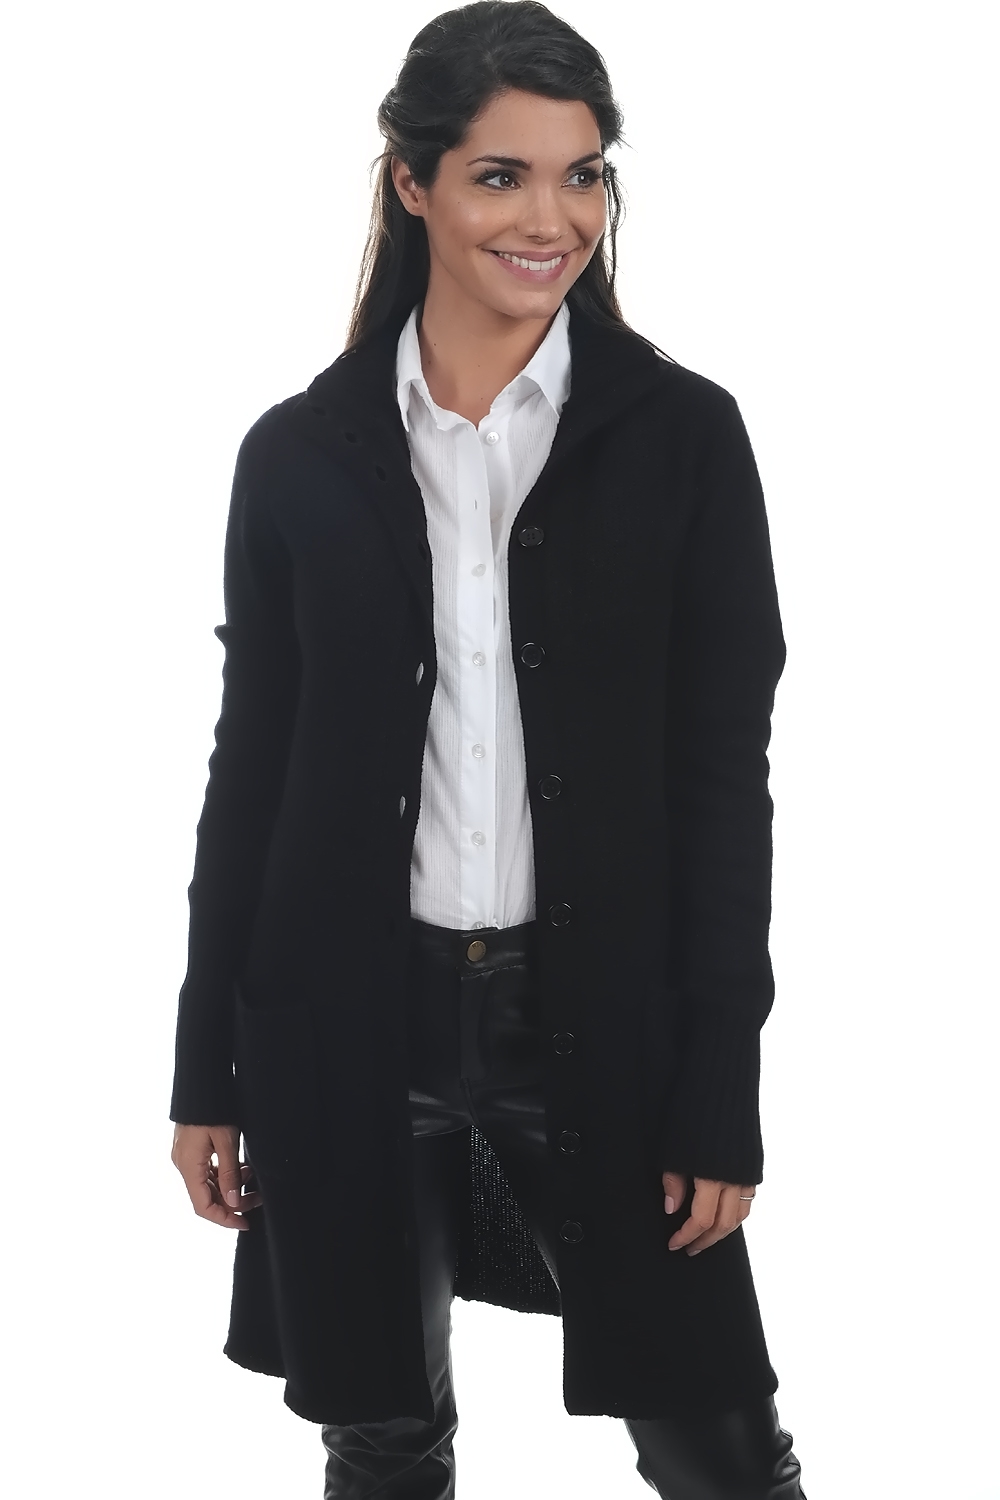 Cachemire robe manteau femme adelphia noir 3xl